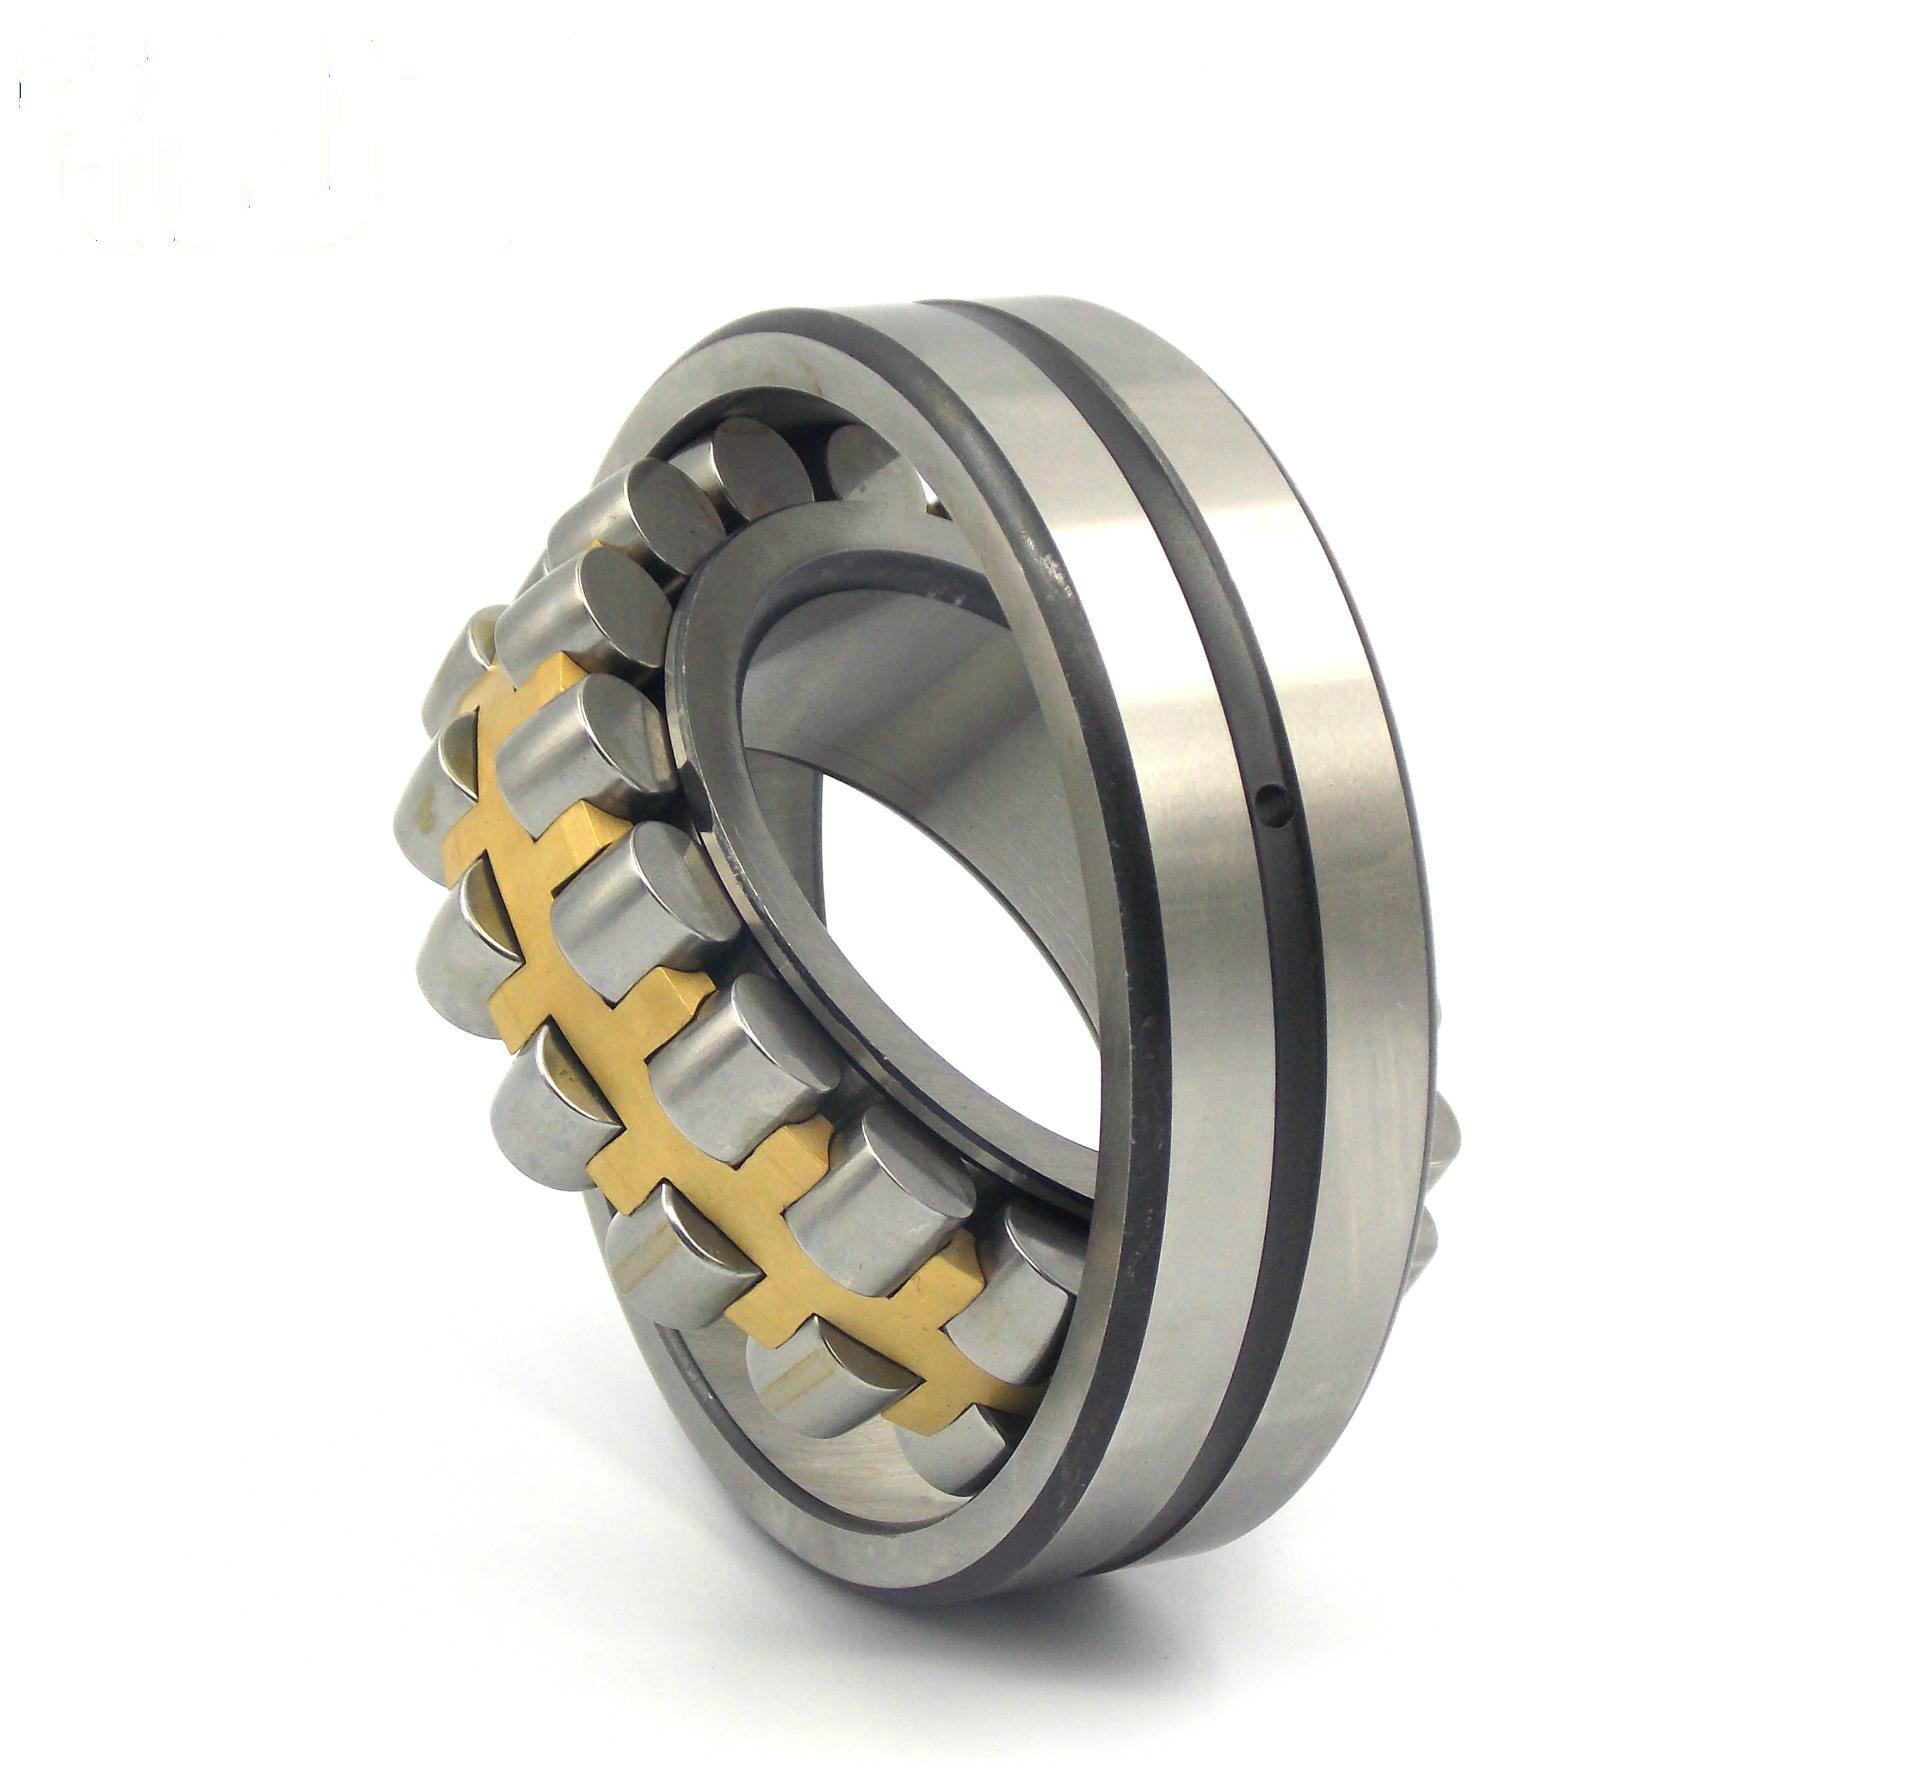  NU 2222 J Cylindrical roller bearing